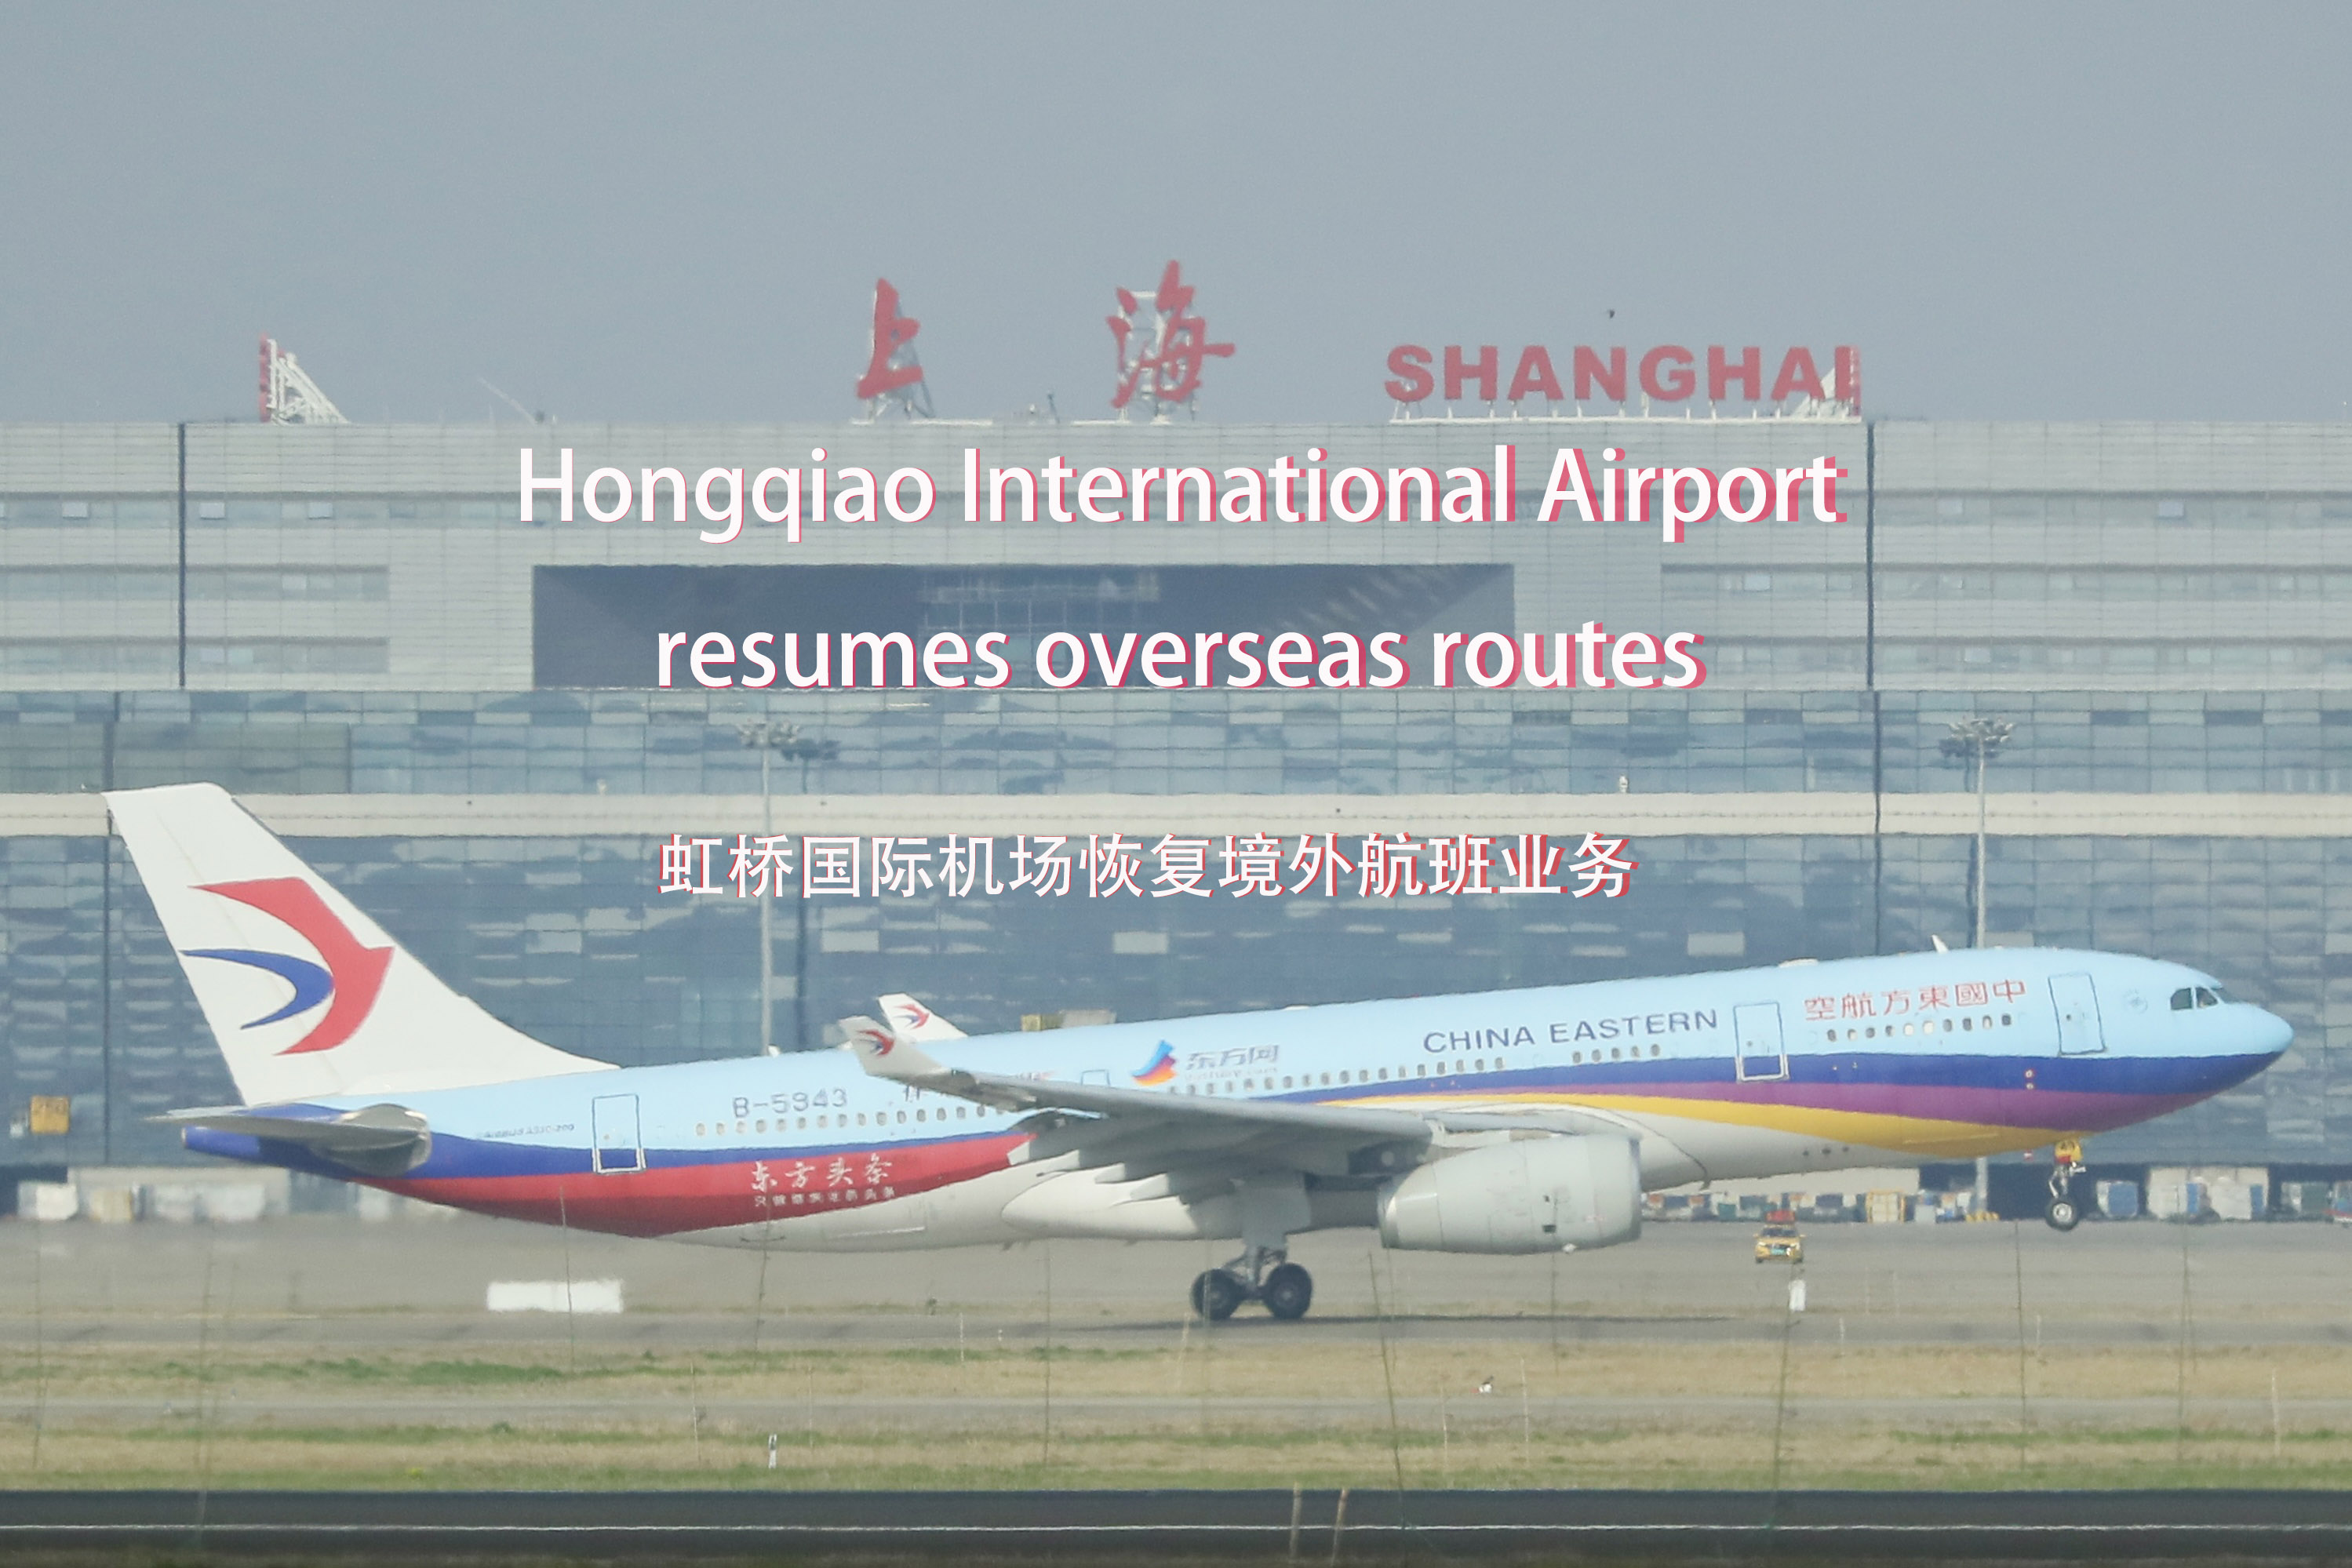 All about Shanghai Hongqiao International Airport